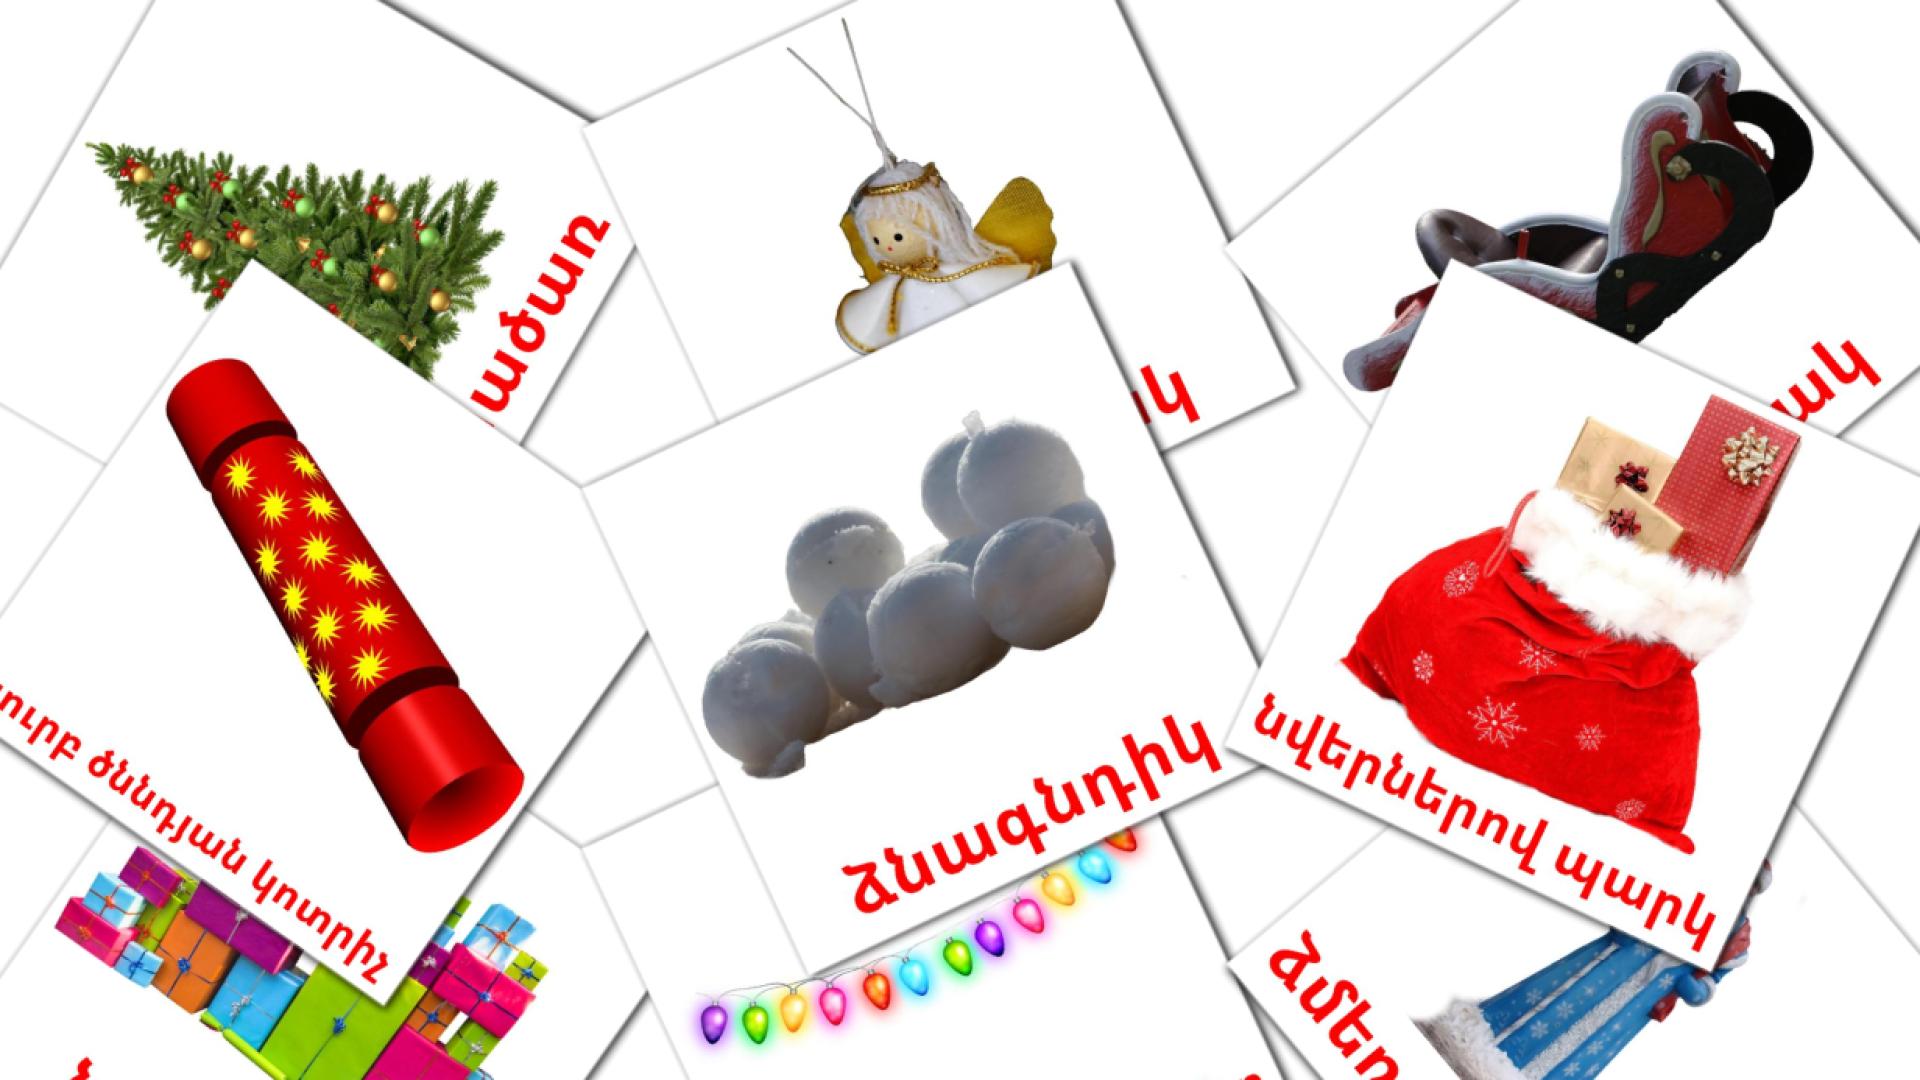 Natale - Schede di vocabolario armeno